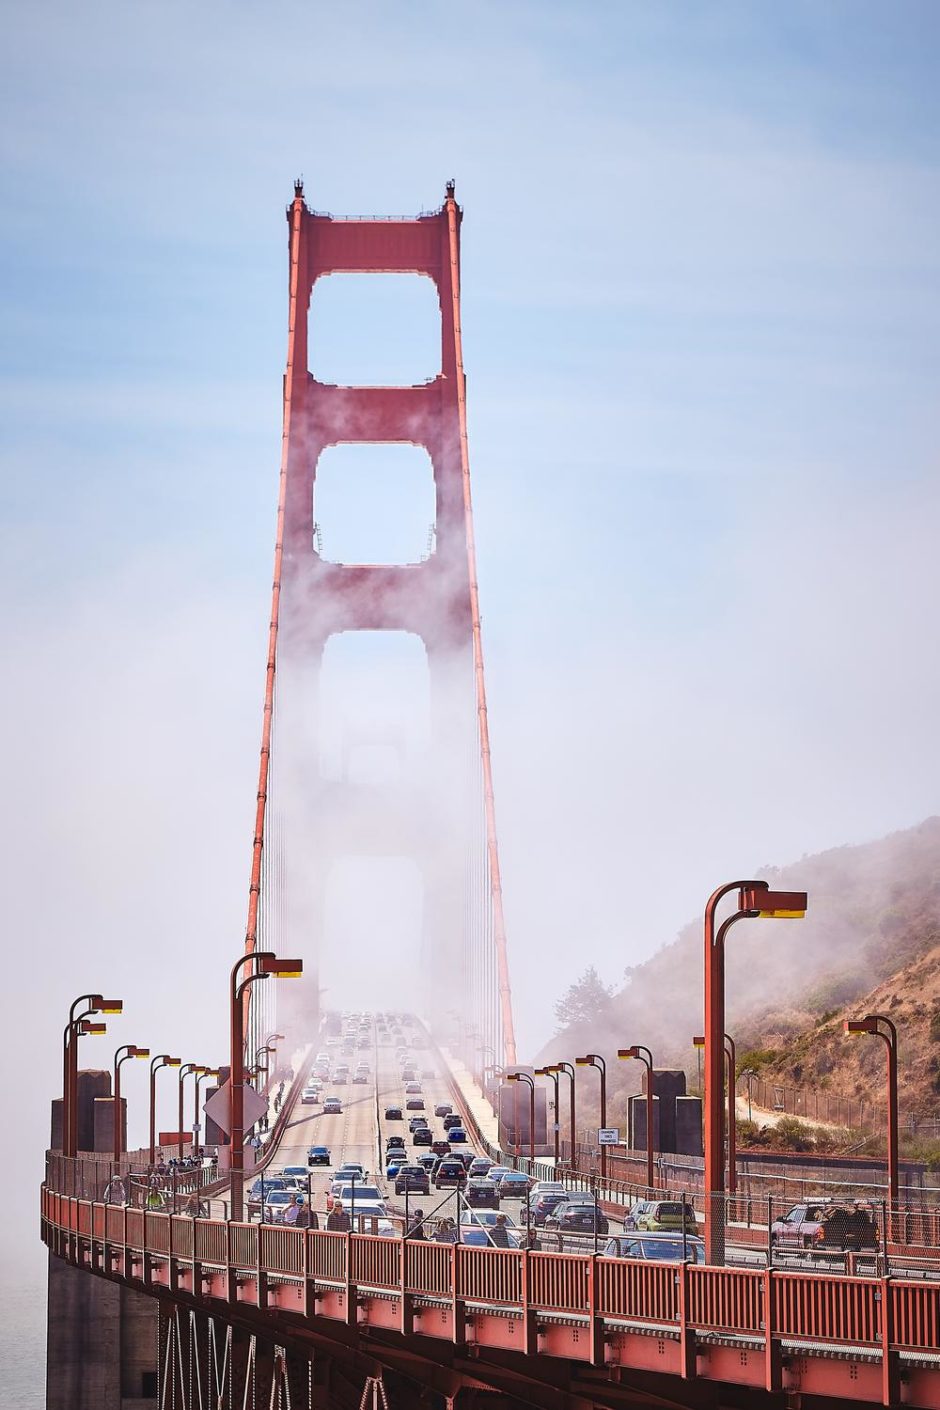 © Fabien Bazanegue - "Golden Gate Bridge"